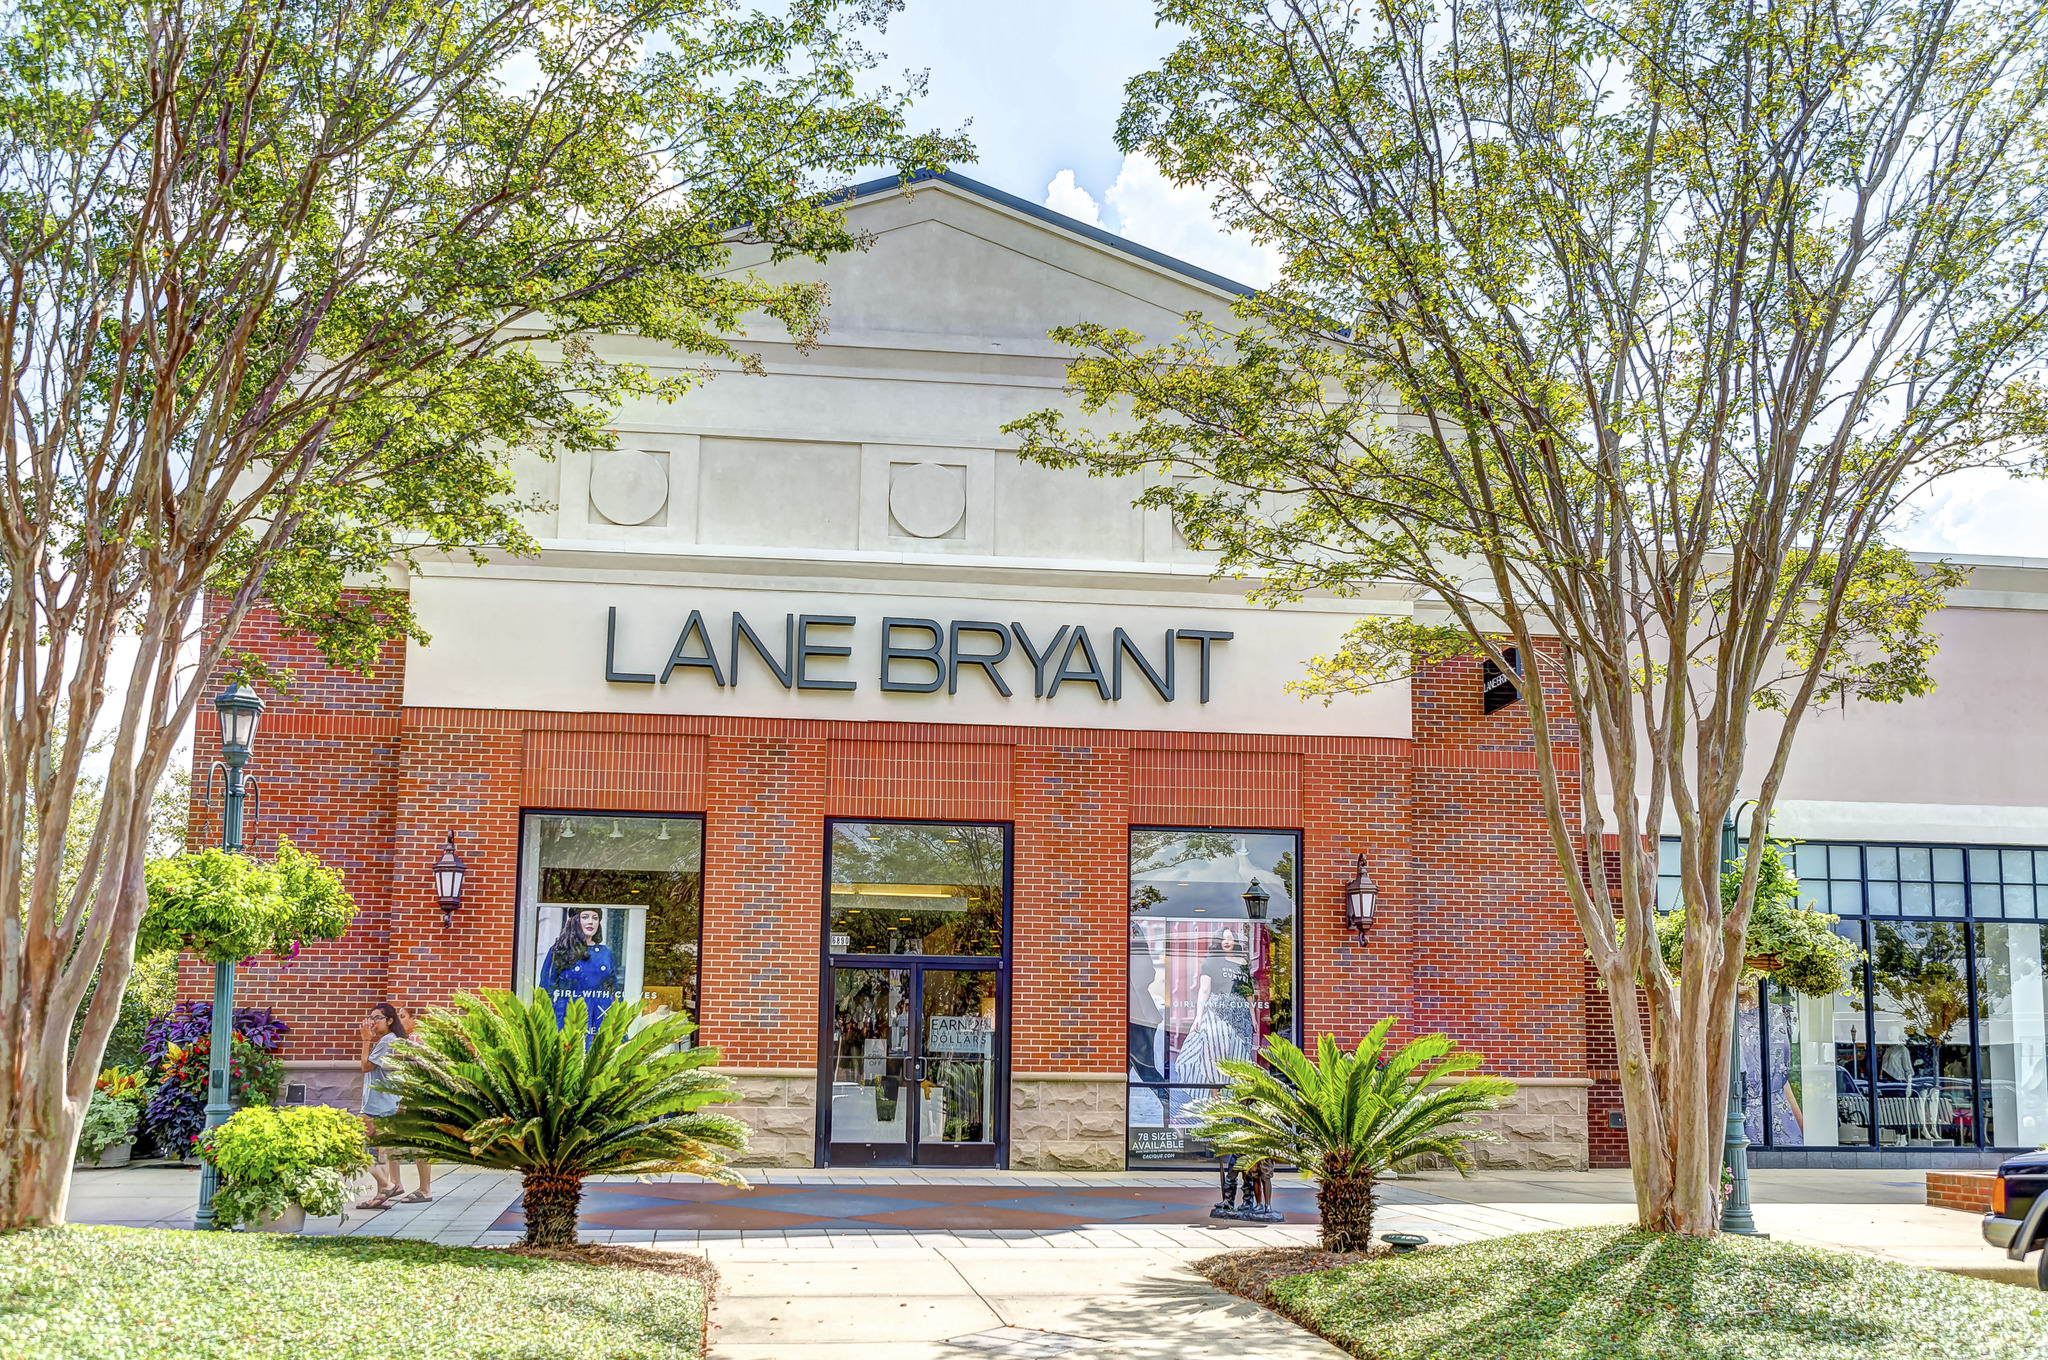 Lane Bryant - The Shoppes at EastChase